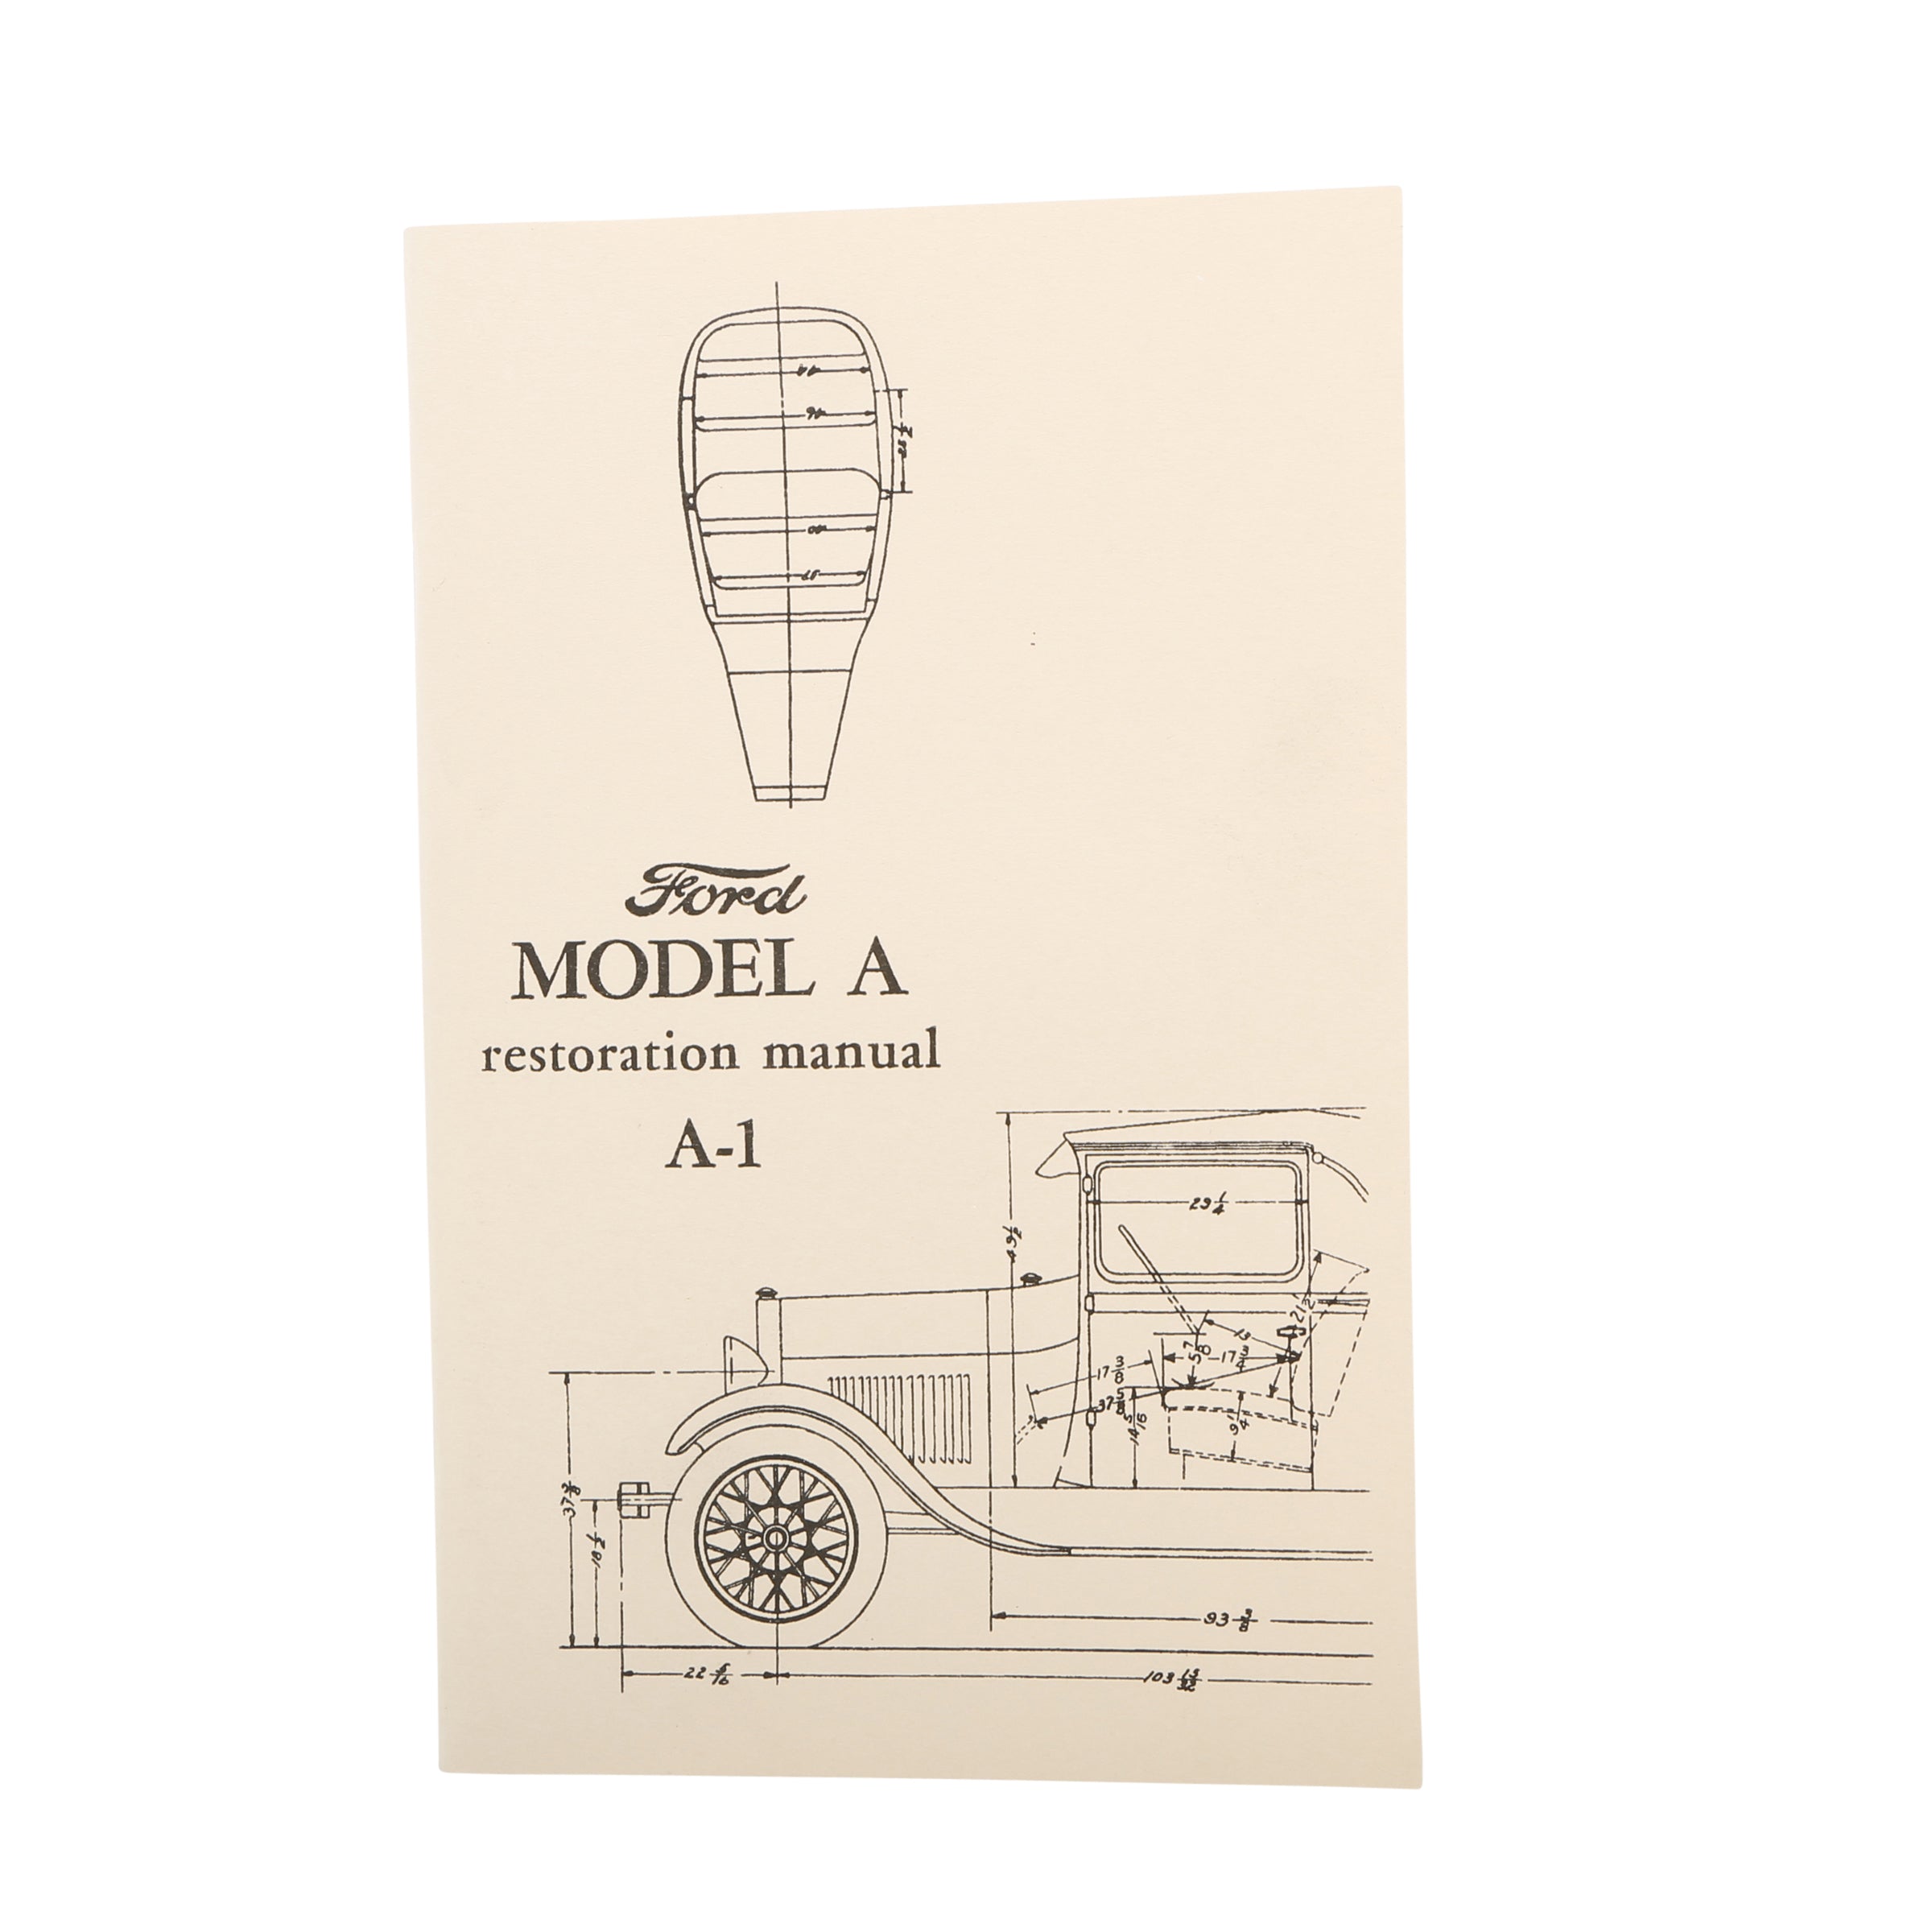 Model A Ford Restoration Manual